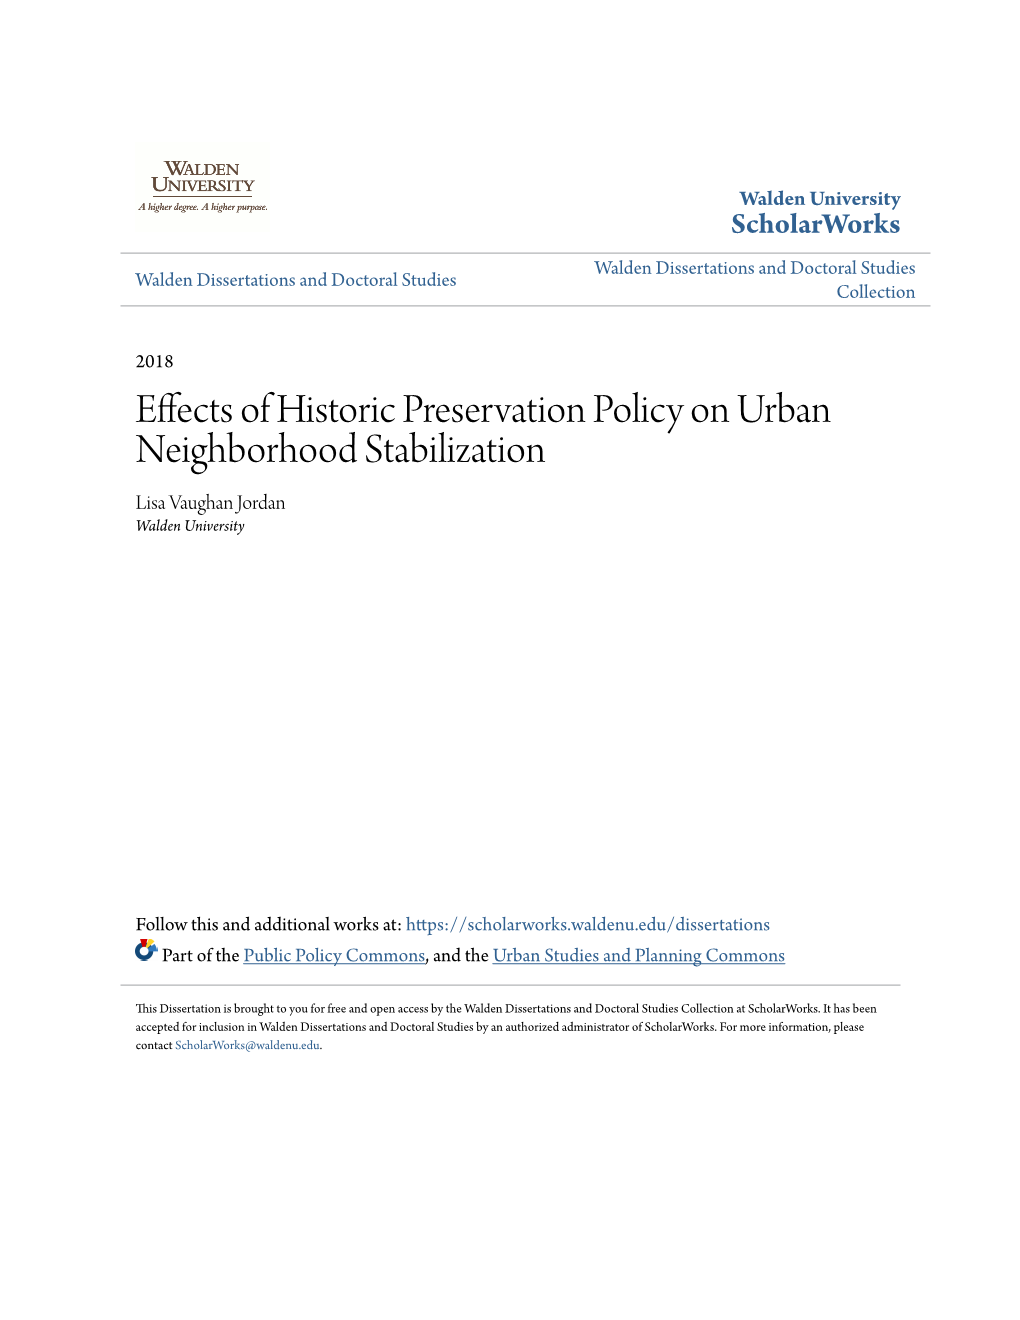 Effects of Historic Preservation Policy on Urban Neighborhood Stabilization Lisa Vaughan Jordan Walden University